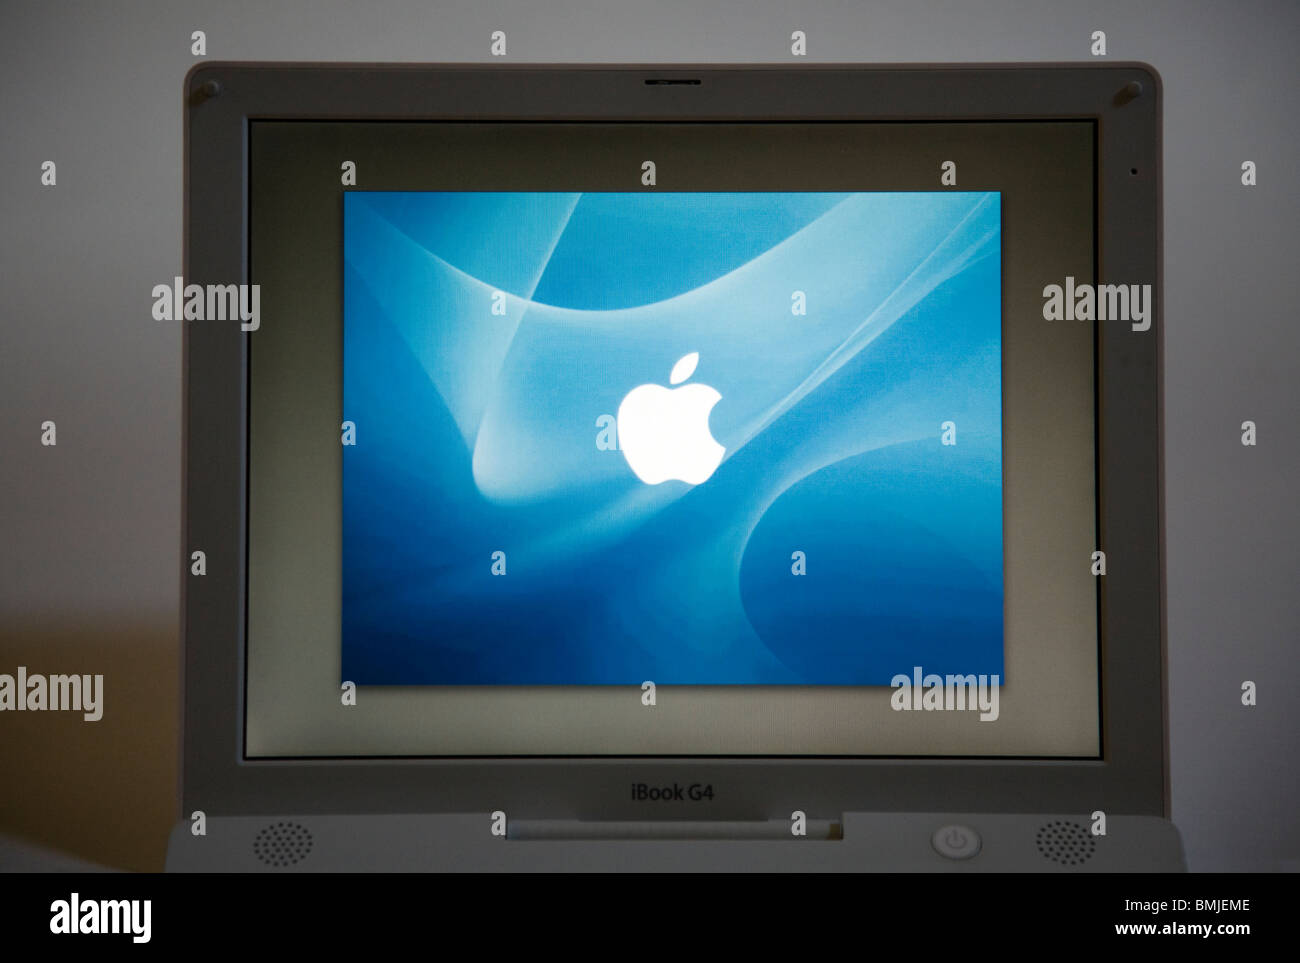 An Apple iBook G4 laptop / lap top computer start / starting up screen saver and keyboard. Stock Photo